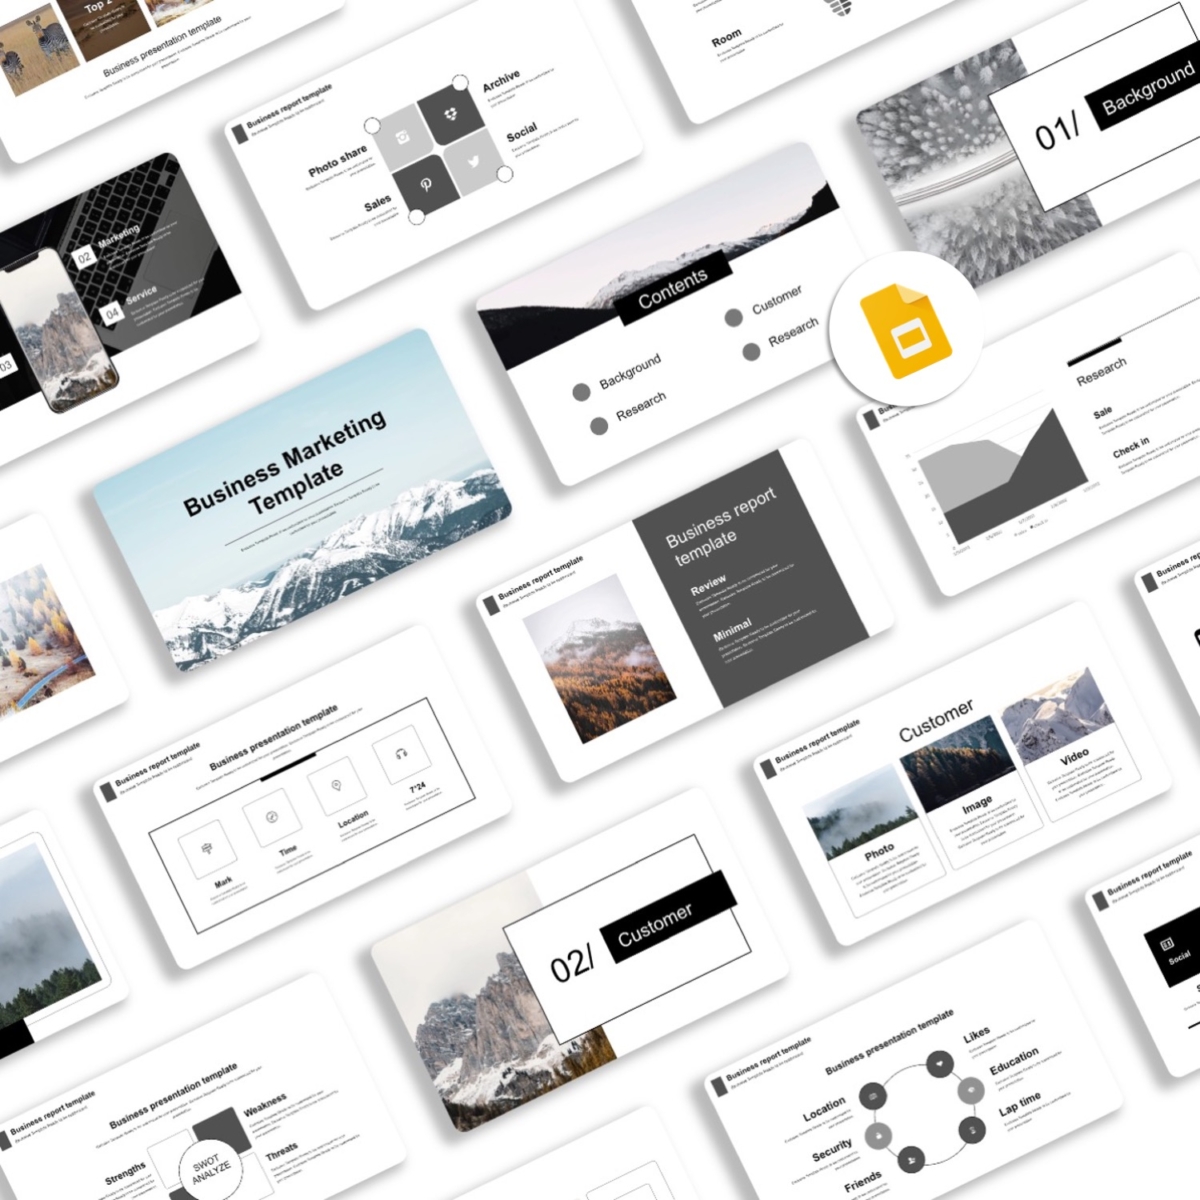 Google Slides-Black White Creative Business Presentation Template